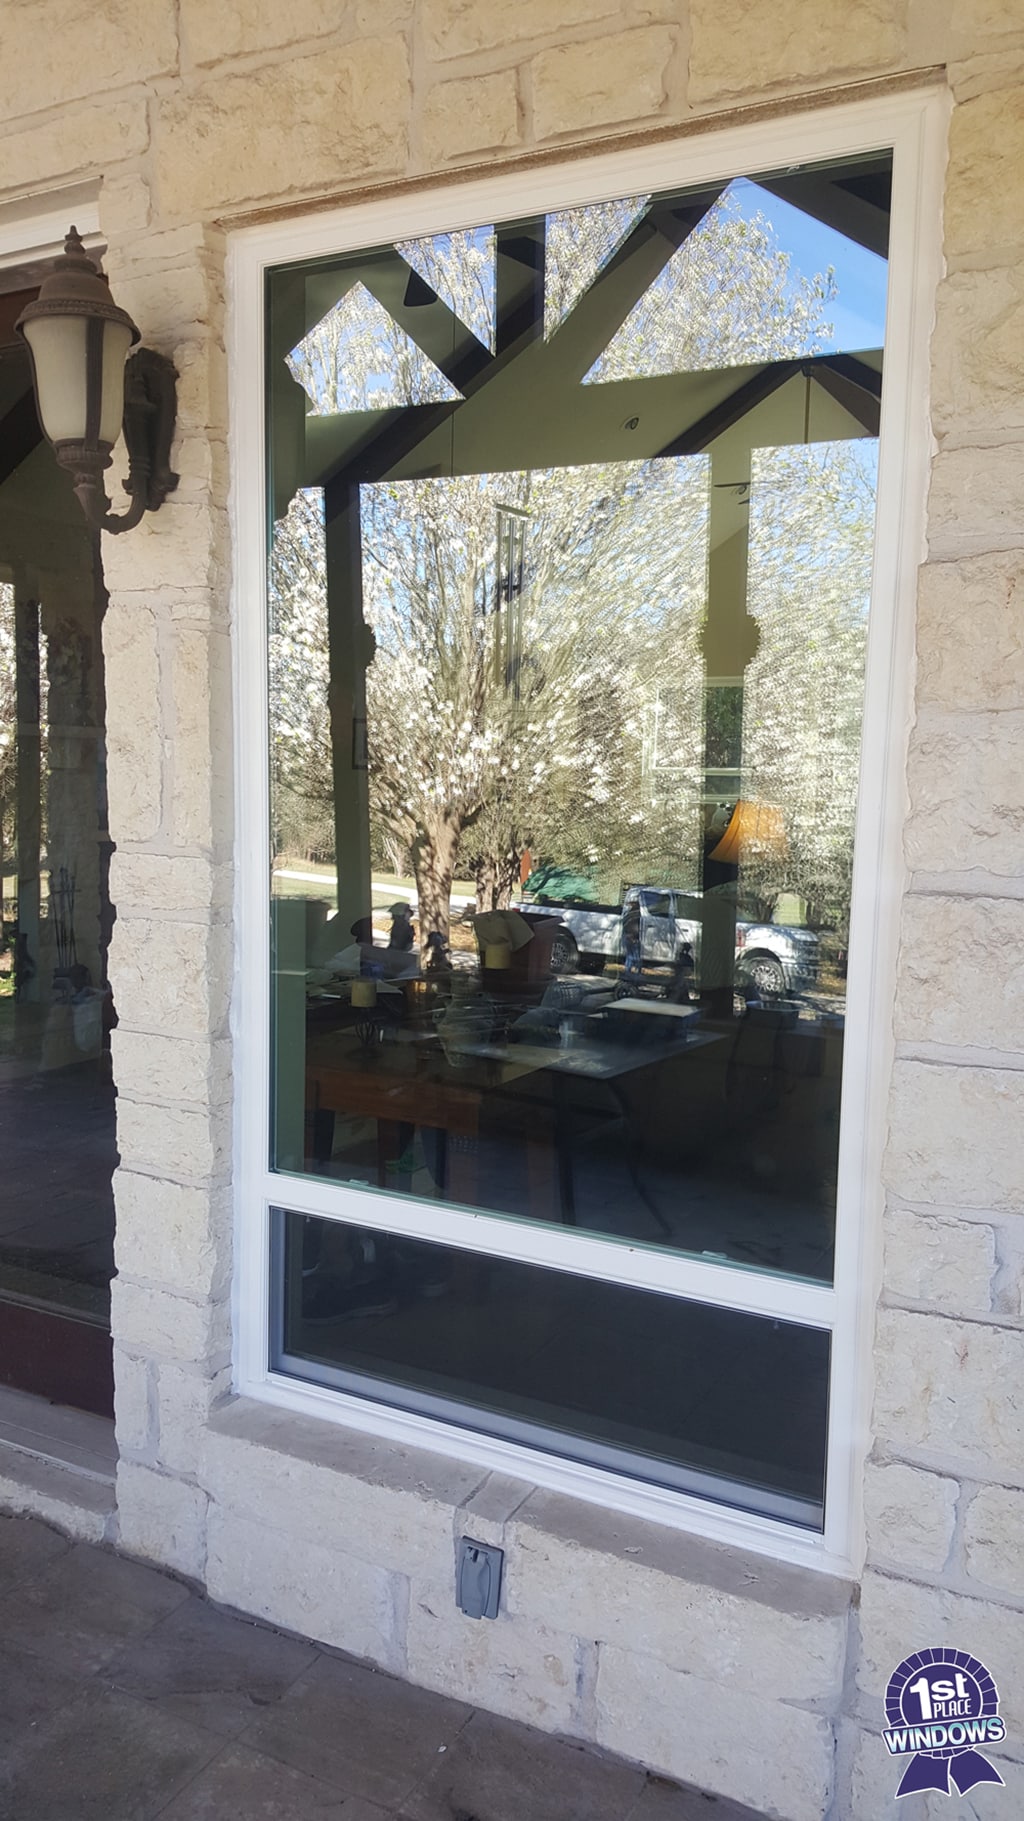 6 Reasons To Install New Home Windows Today | San Antonio, TX